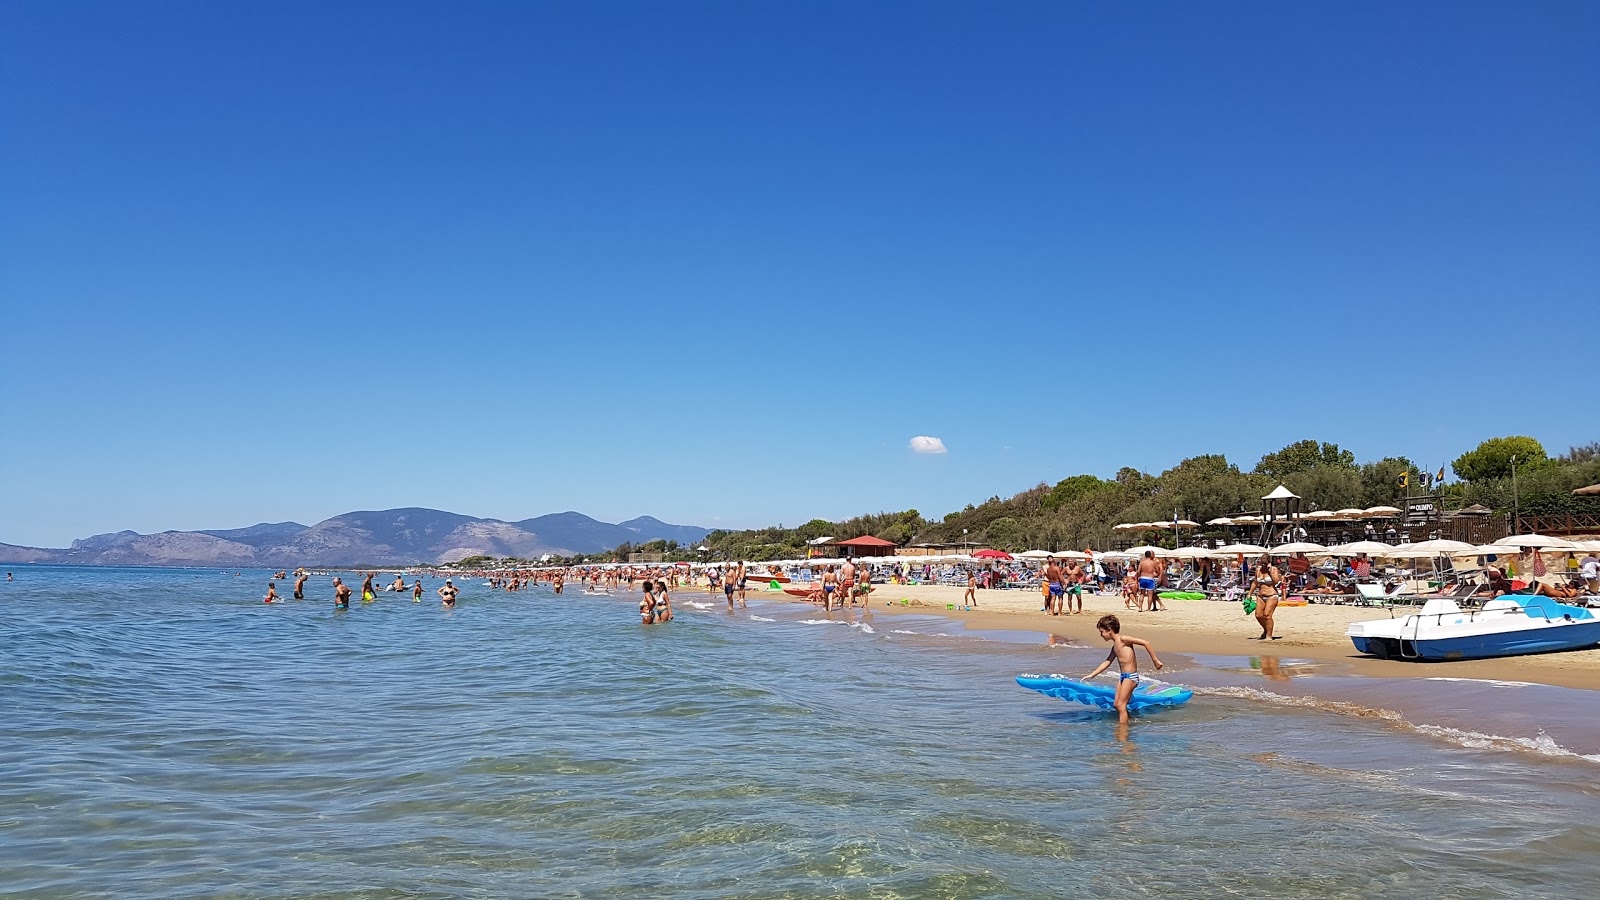 Foto av Spiaggia di Sperlonga med lång rak strand